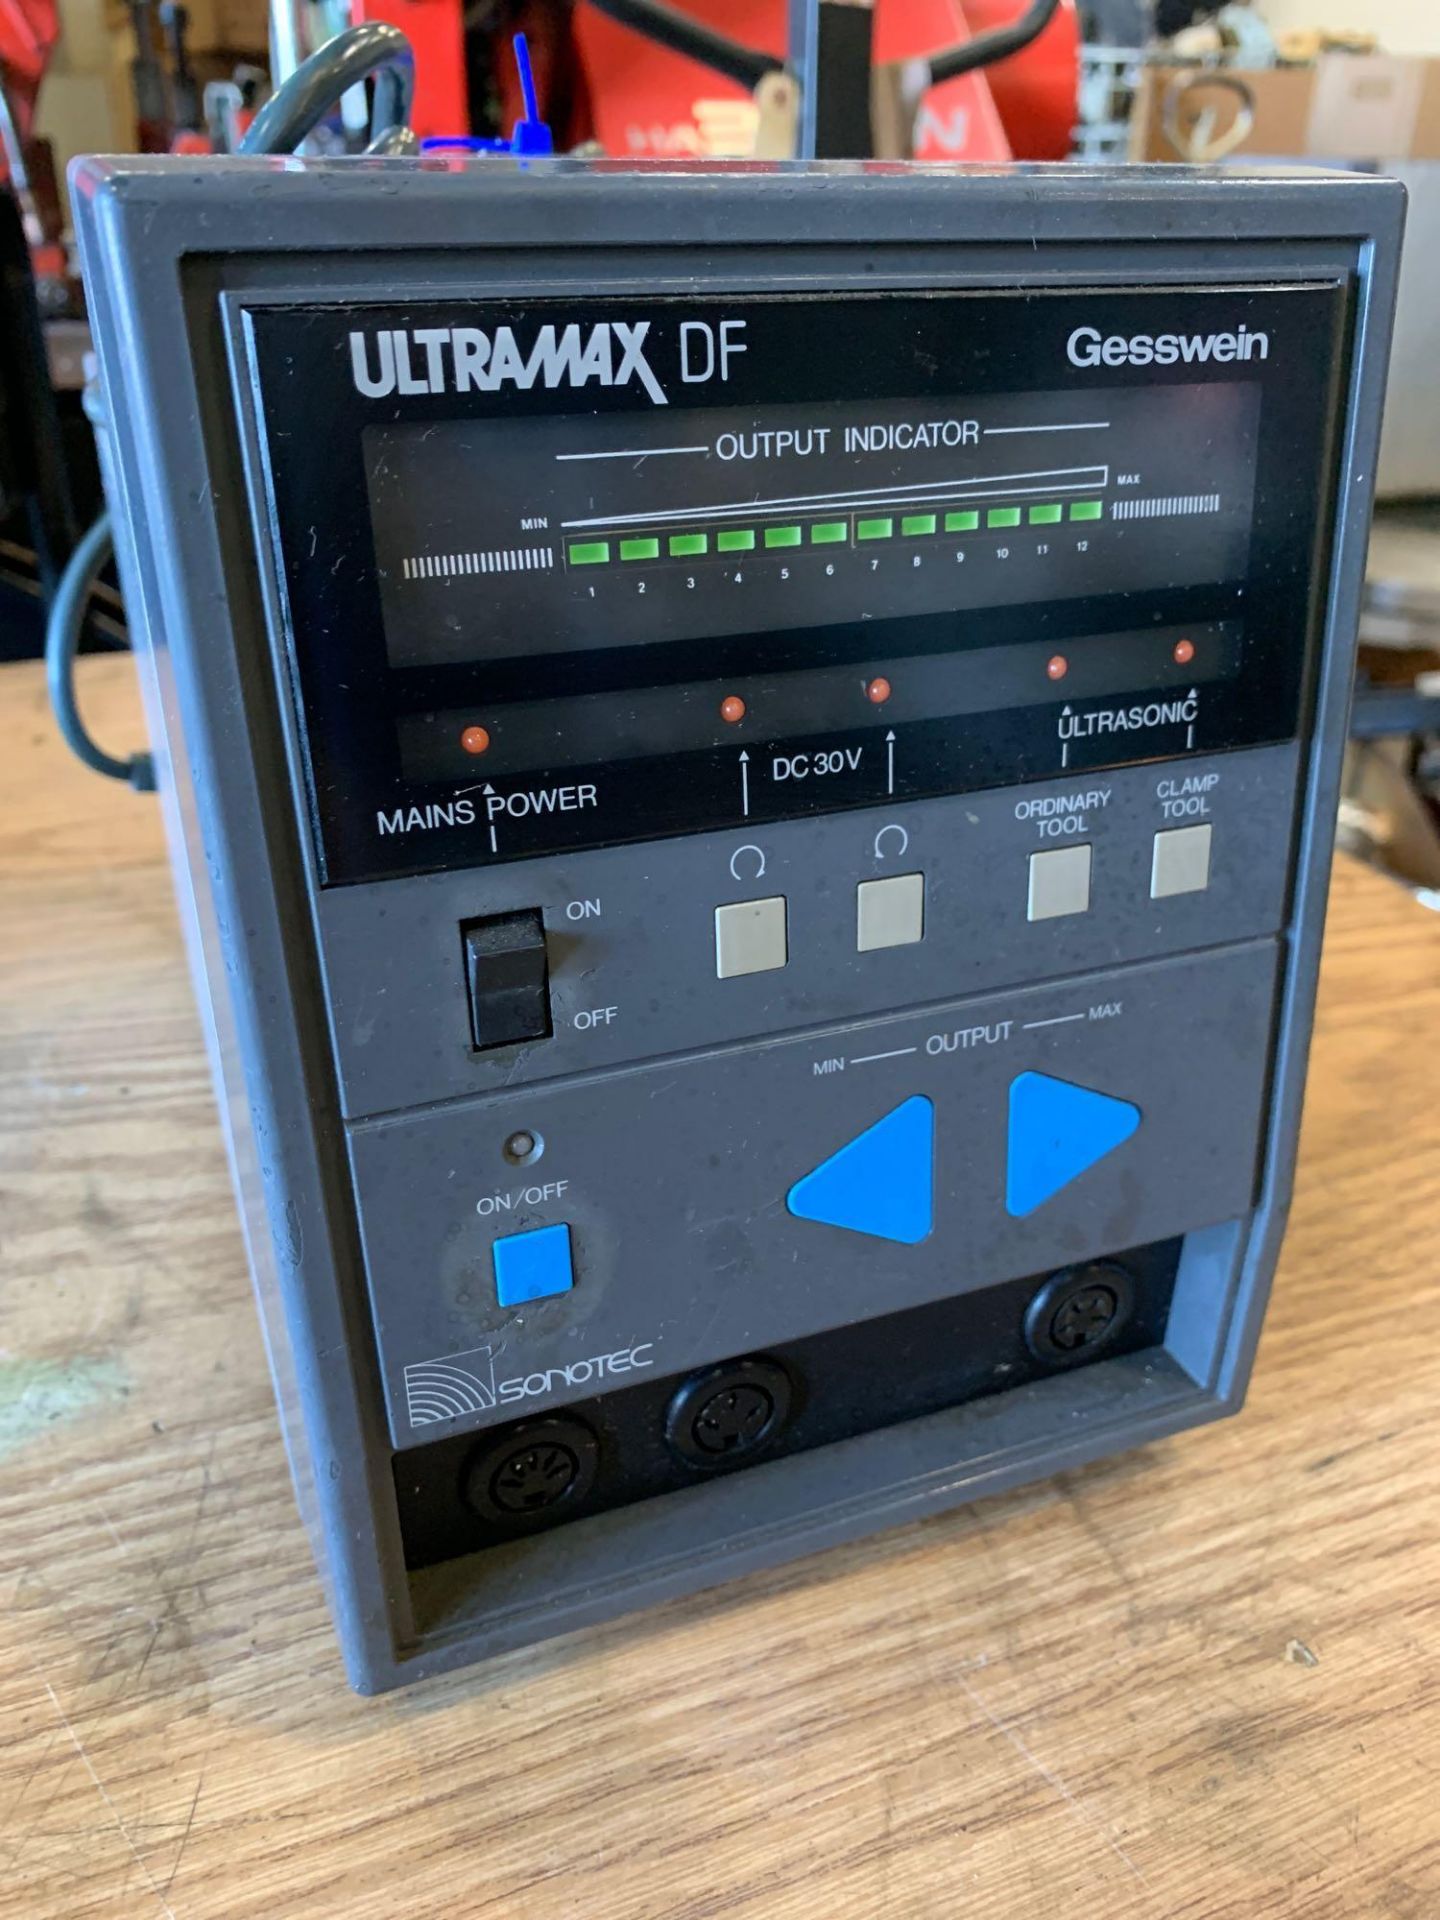 Ultramax DF Gesswein Output Indicator Sonotec, 115V, DC 30V, s/n: M52-0485